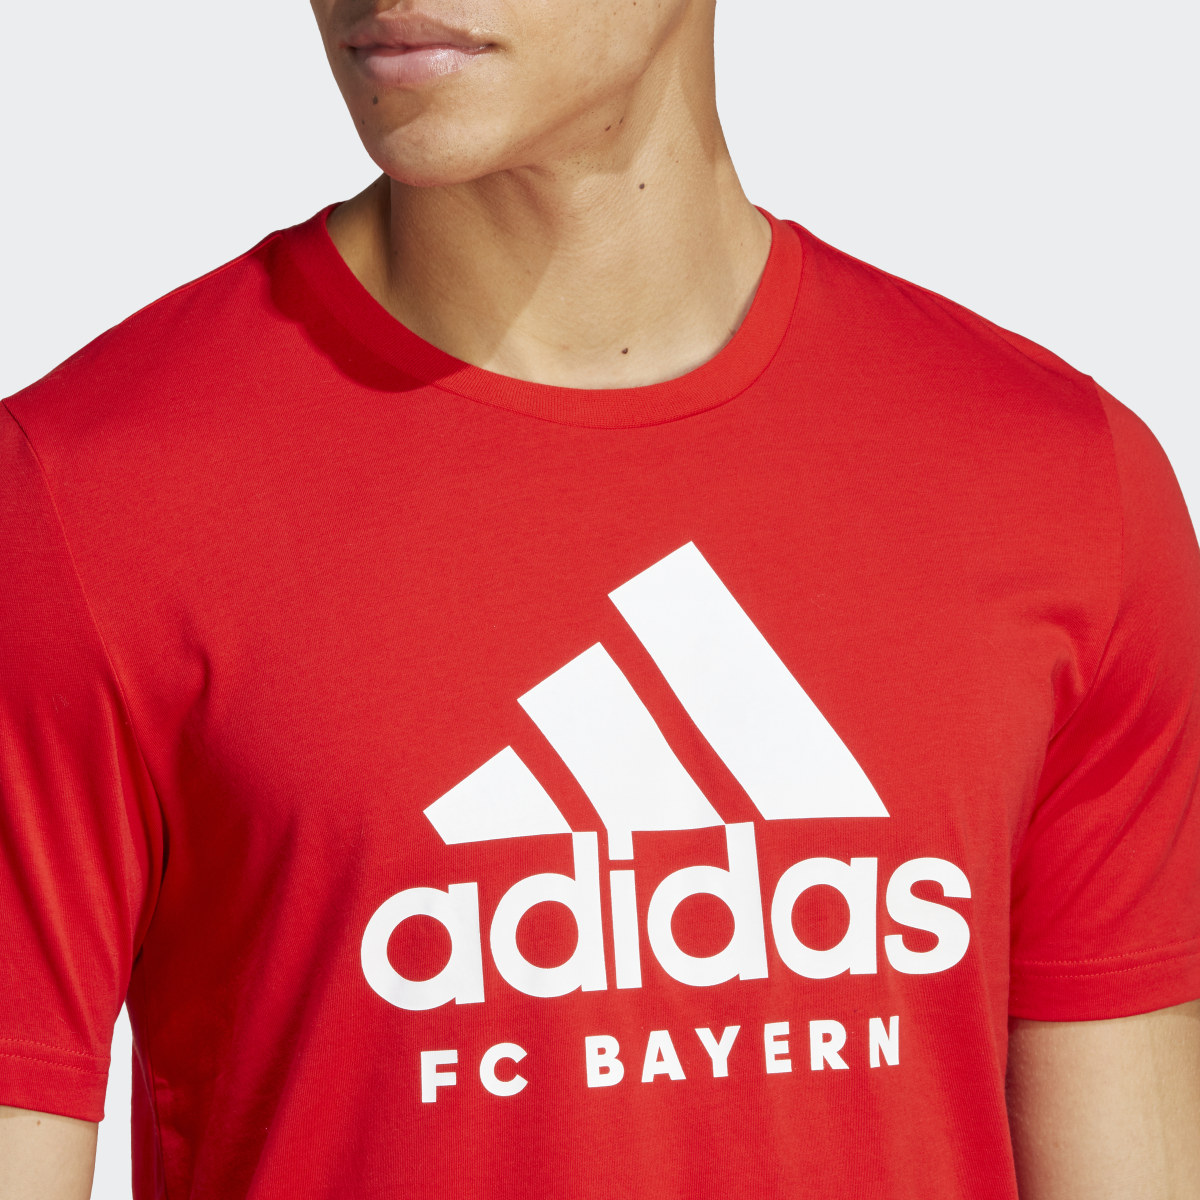 Adidas FC Bayern DNA Graphic T-Shirt. 6